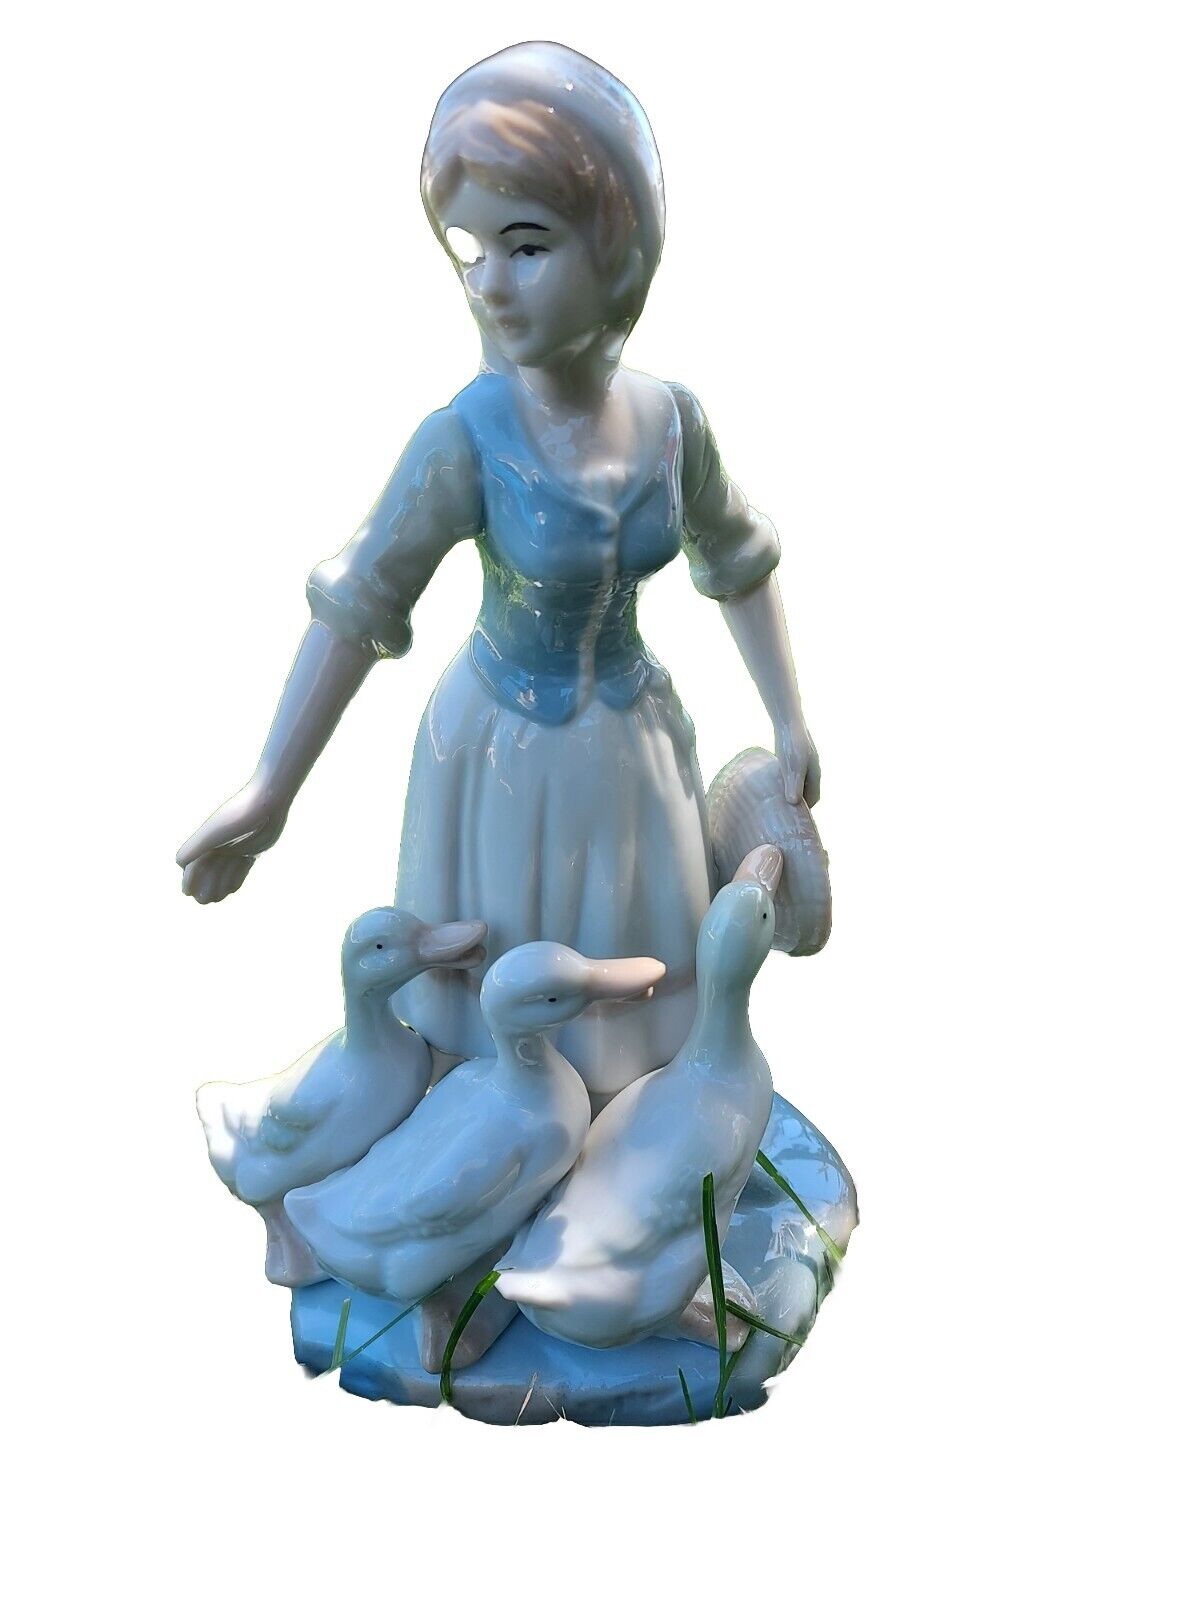 Vintage Duncan Royale Peasant Girl With Ducks Figurine 